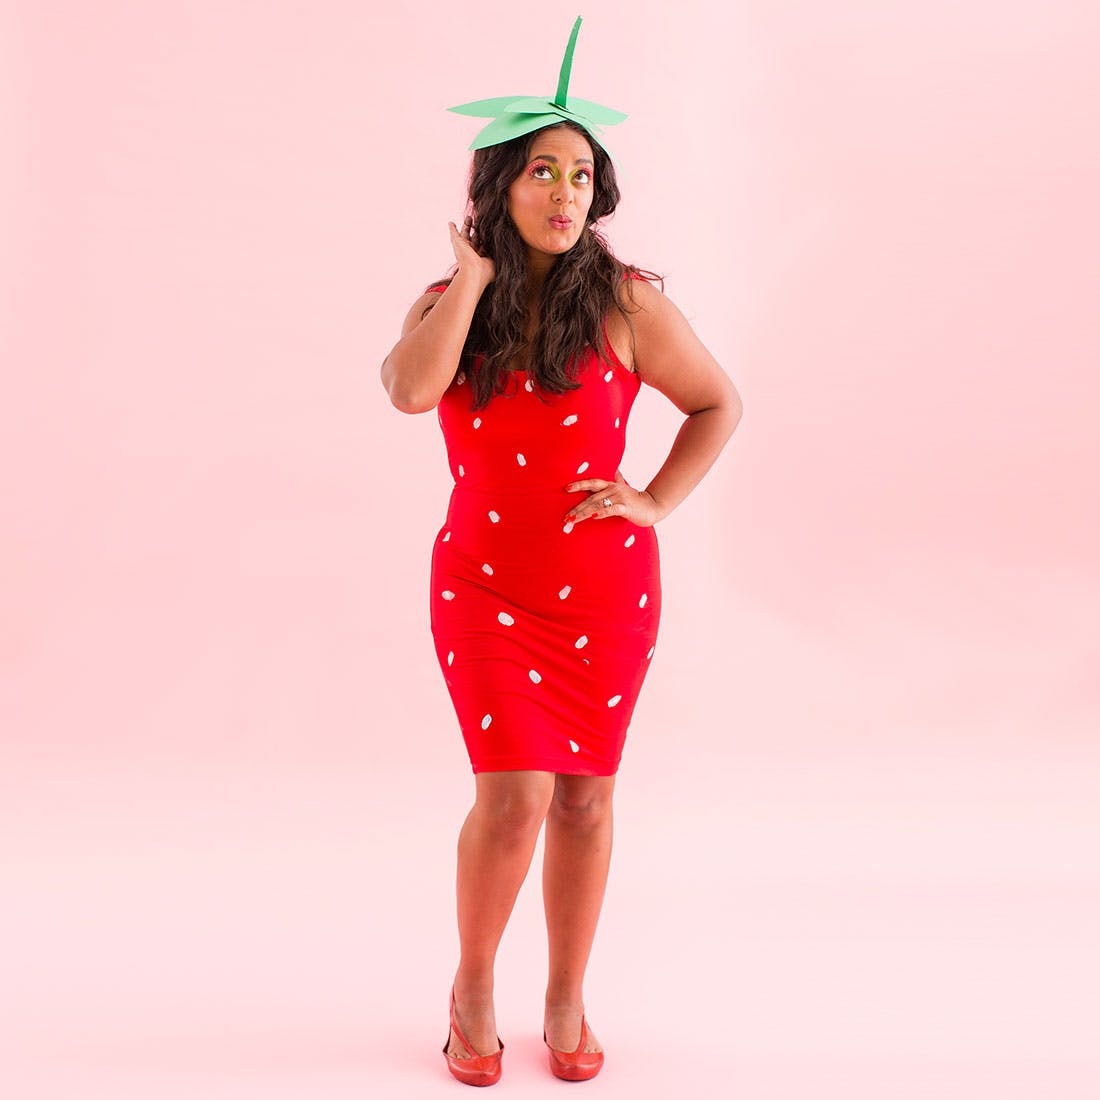 homemade strawberry costume - Google Search | Carnevale, Costumi di  carnevale, Costume di carnevale